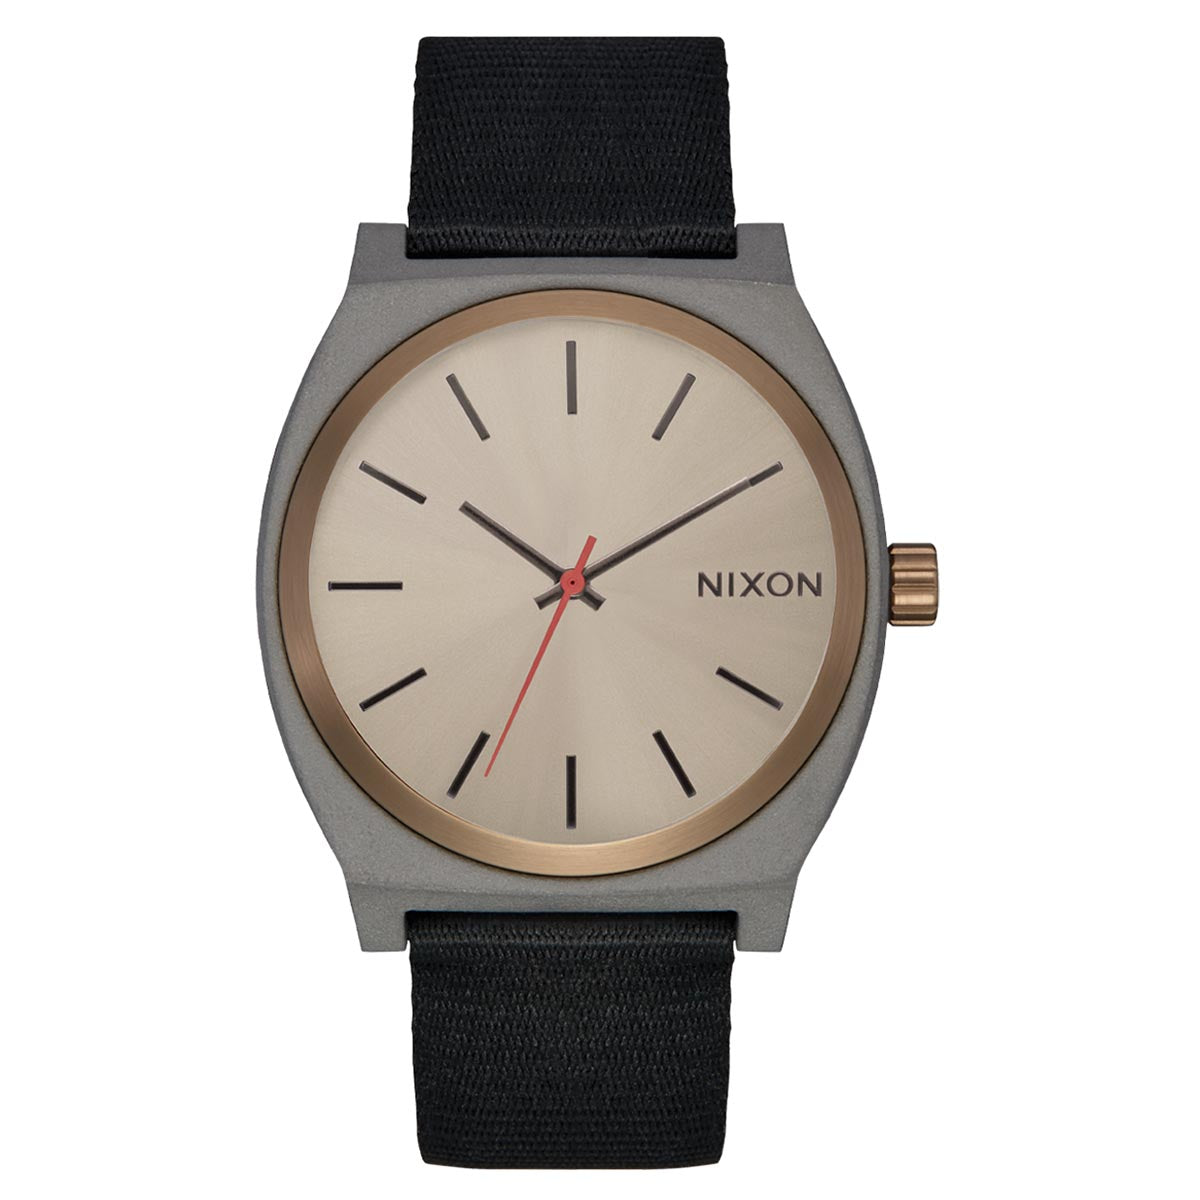 Nixon Time Teller Nylon Watch - Dark Gray/Pumice/Black image 4